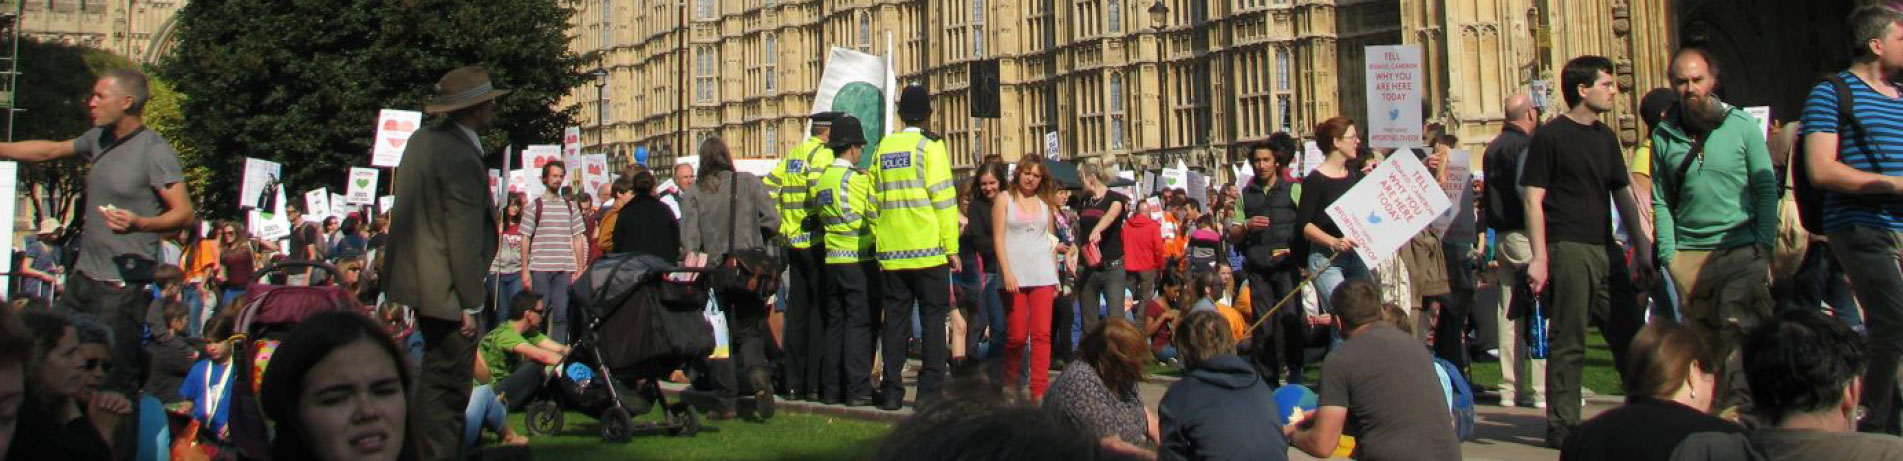 Mass demonstration in London